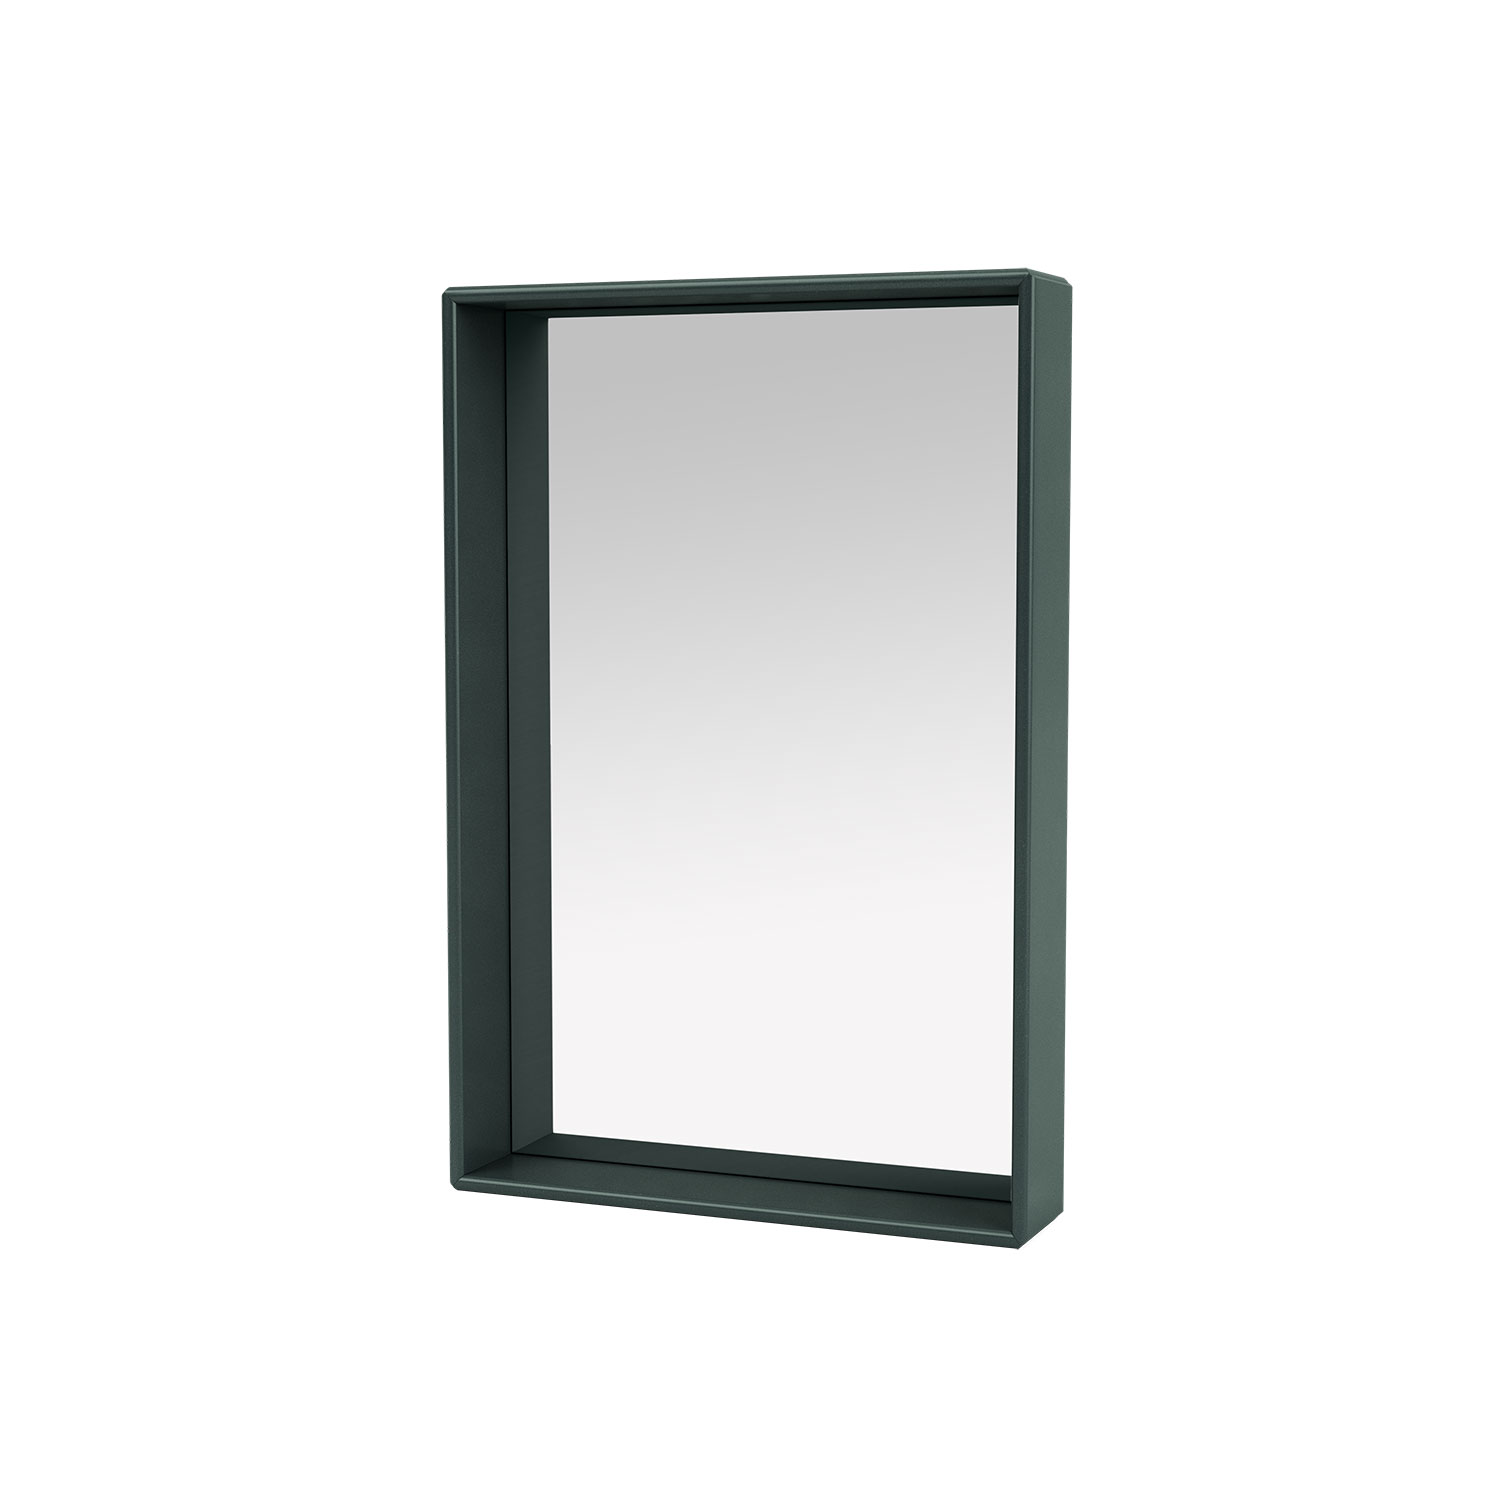 SHELFIE mirror with shelf, Black Jade